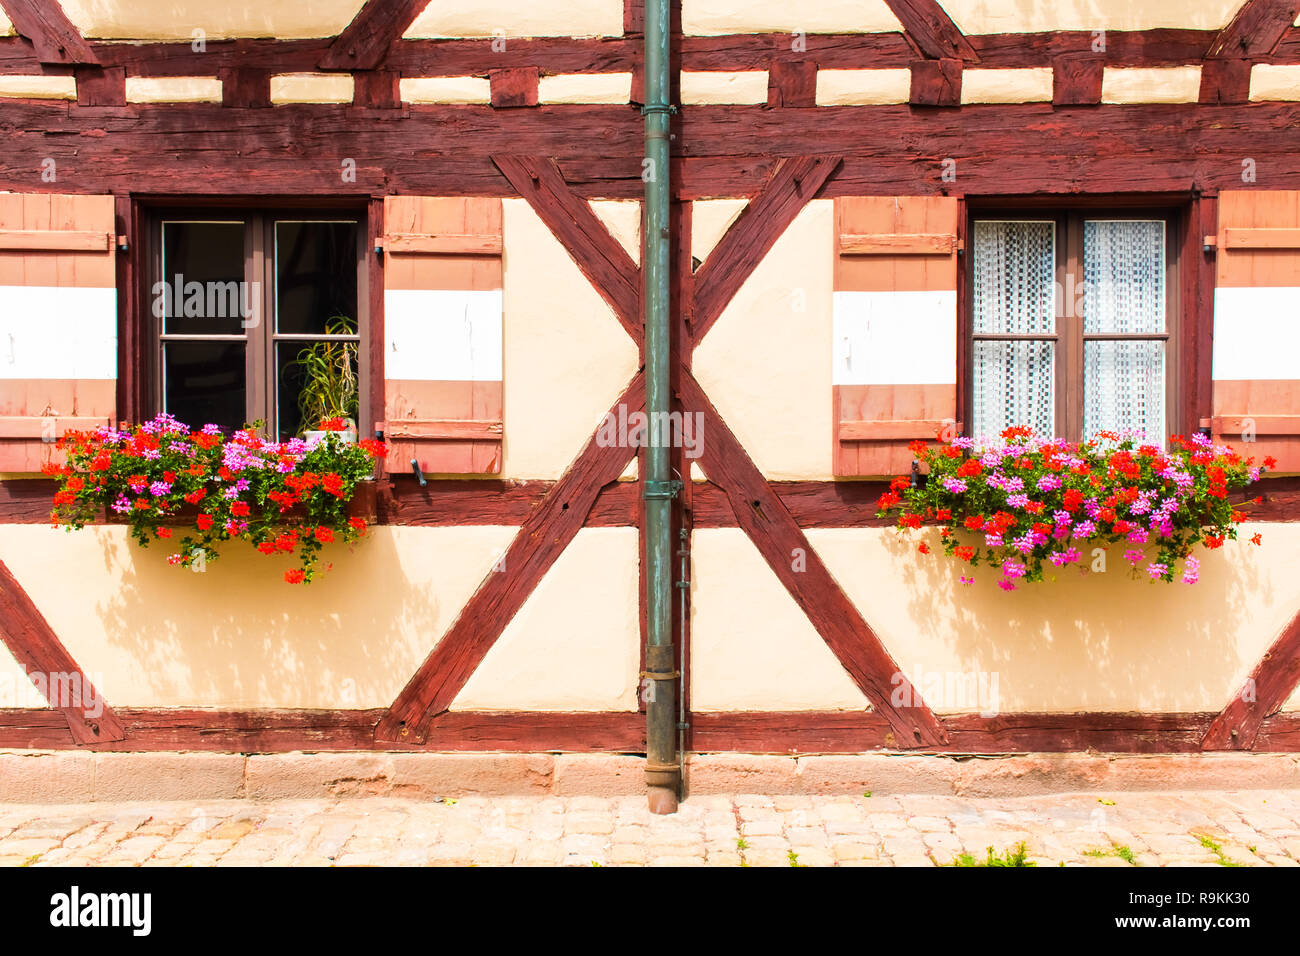 Beatuful wondows and doors architecture of Nuremberg buildings in Germany Stock Photo